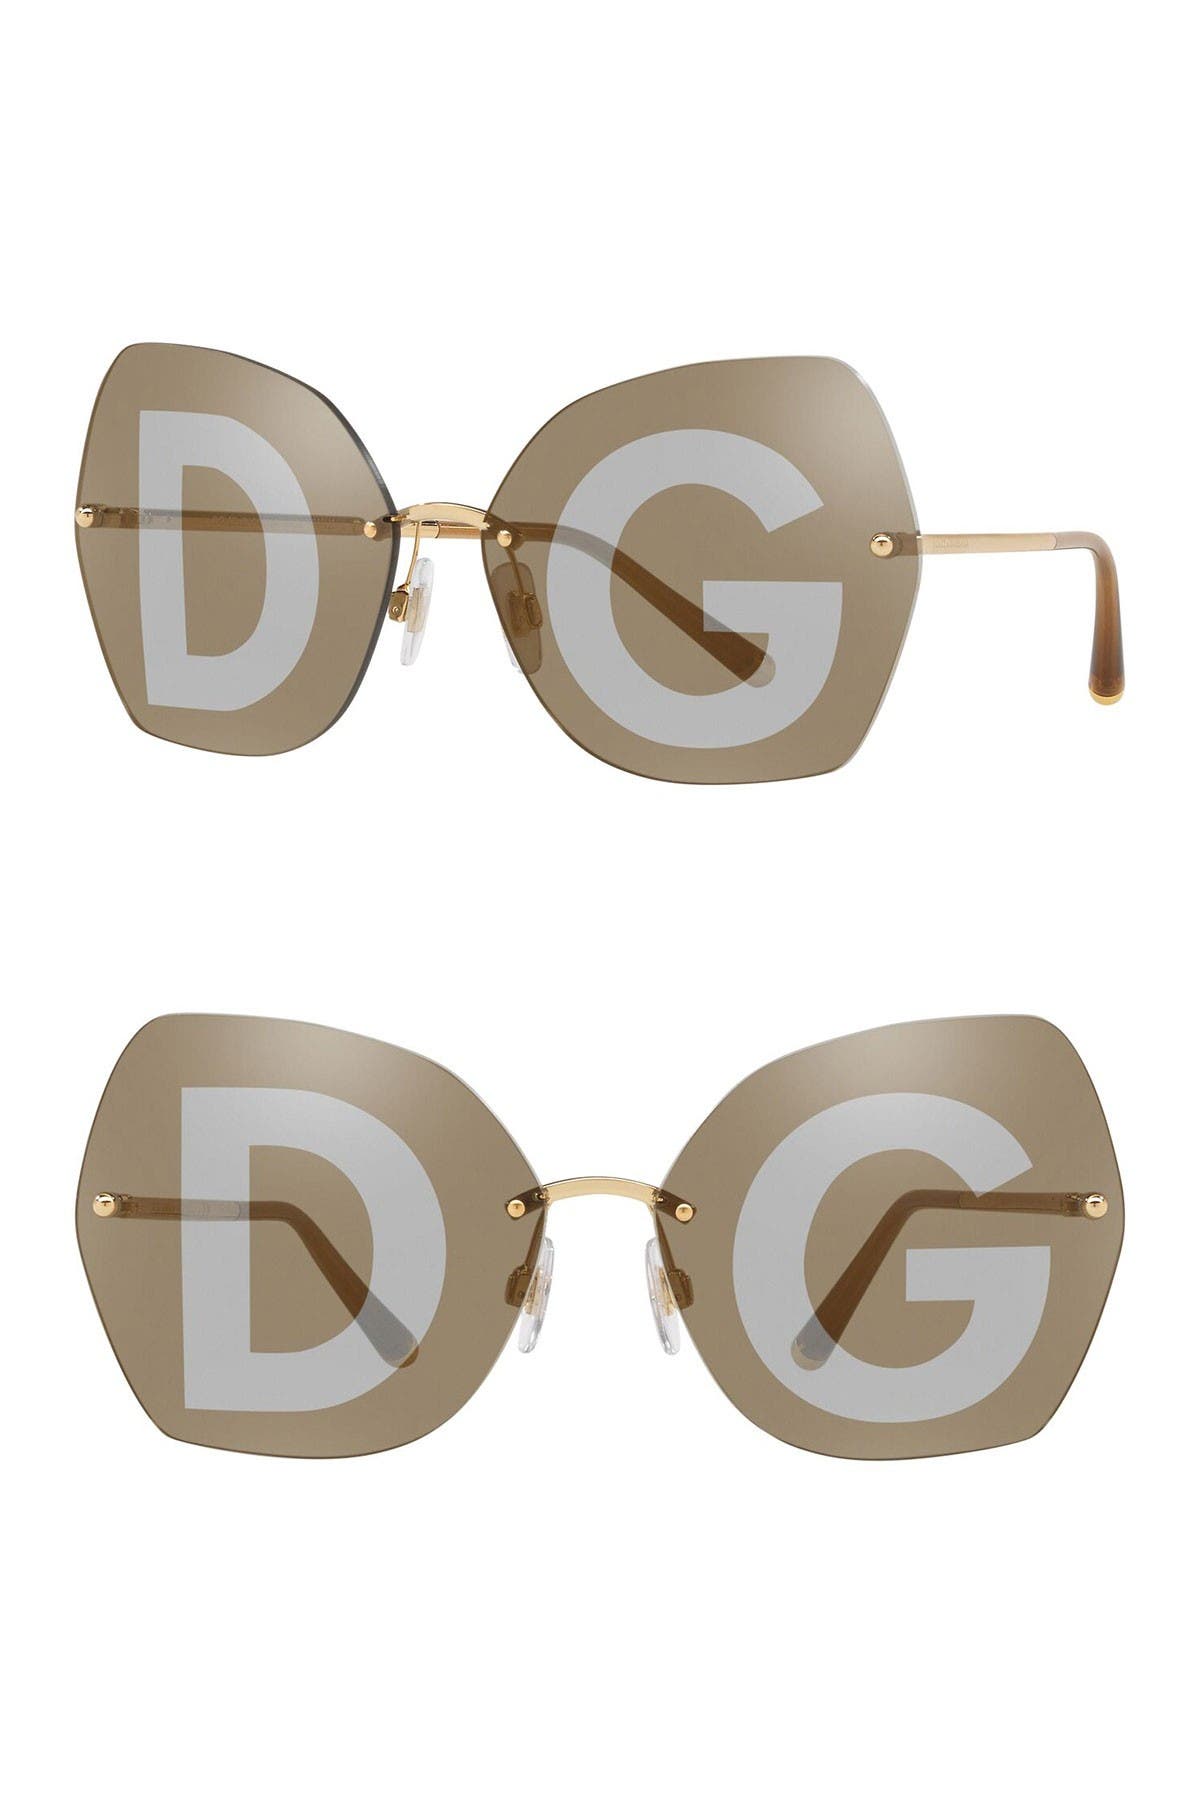 dolce gabbana dg logo sunglasses